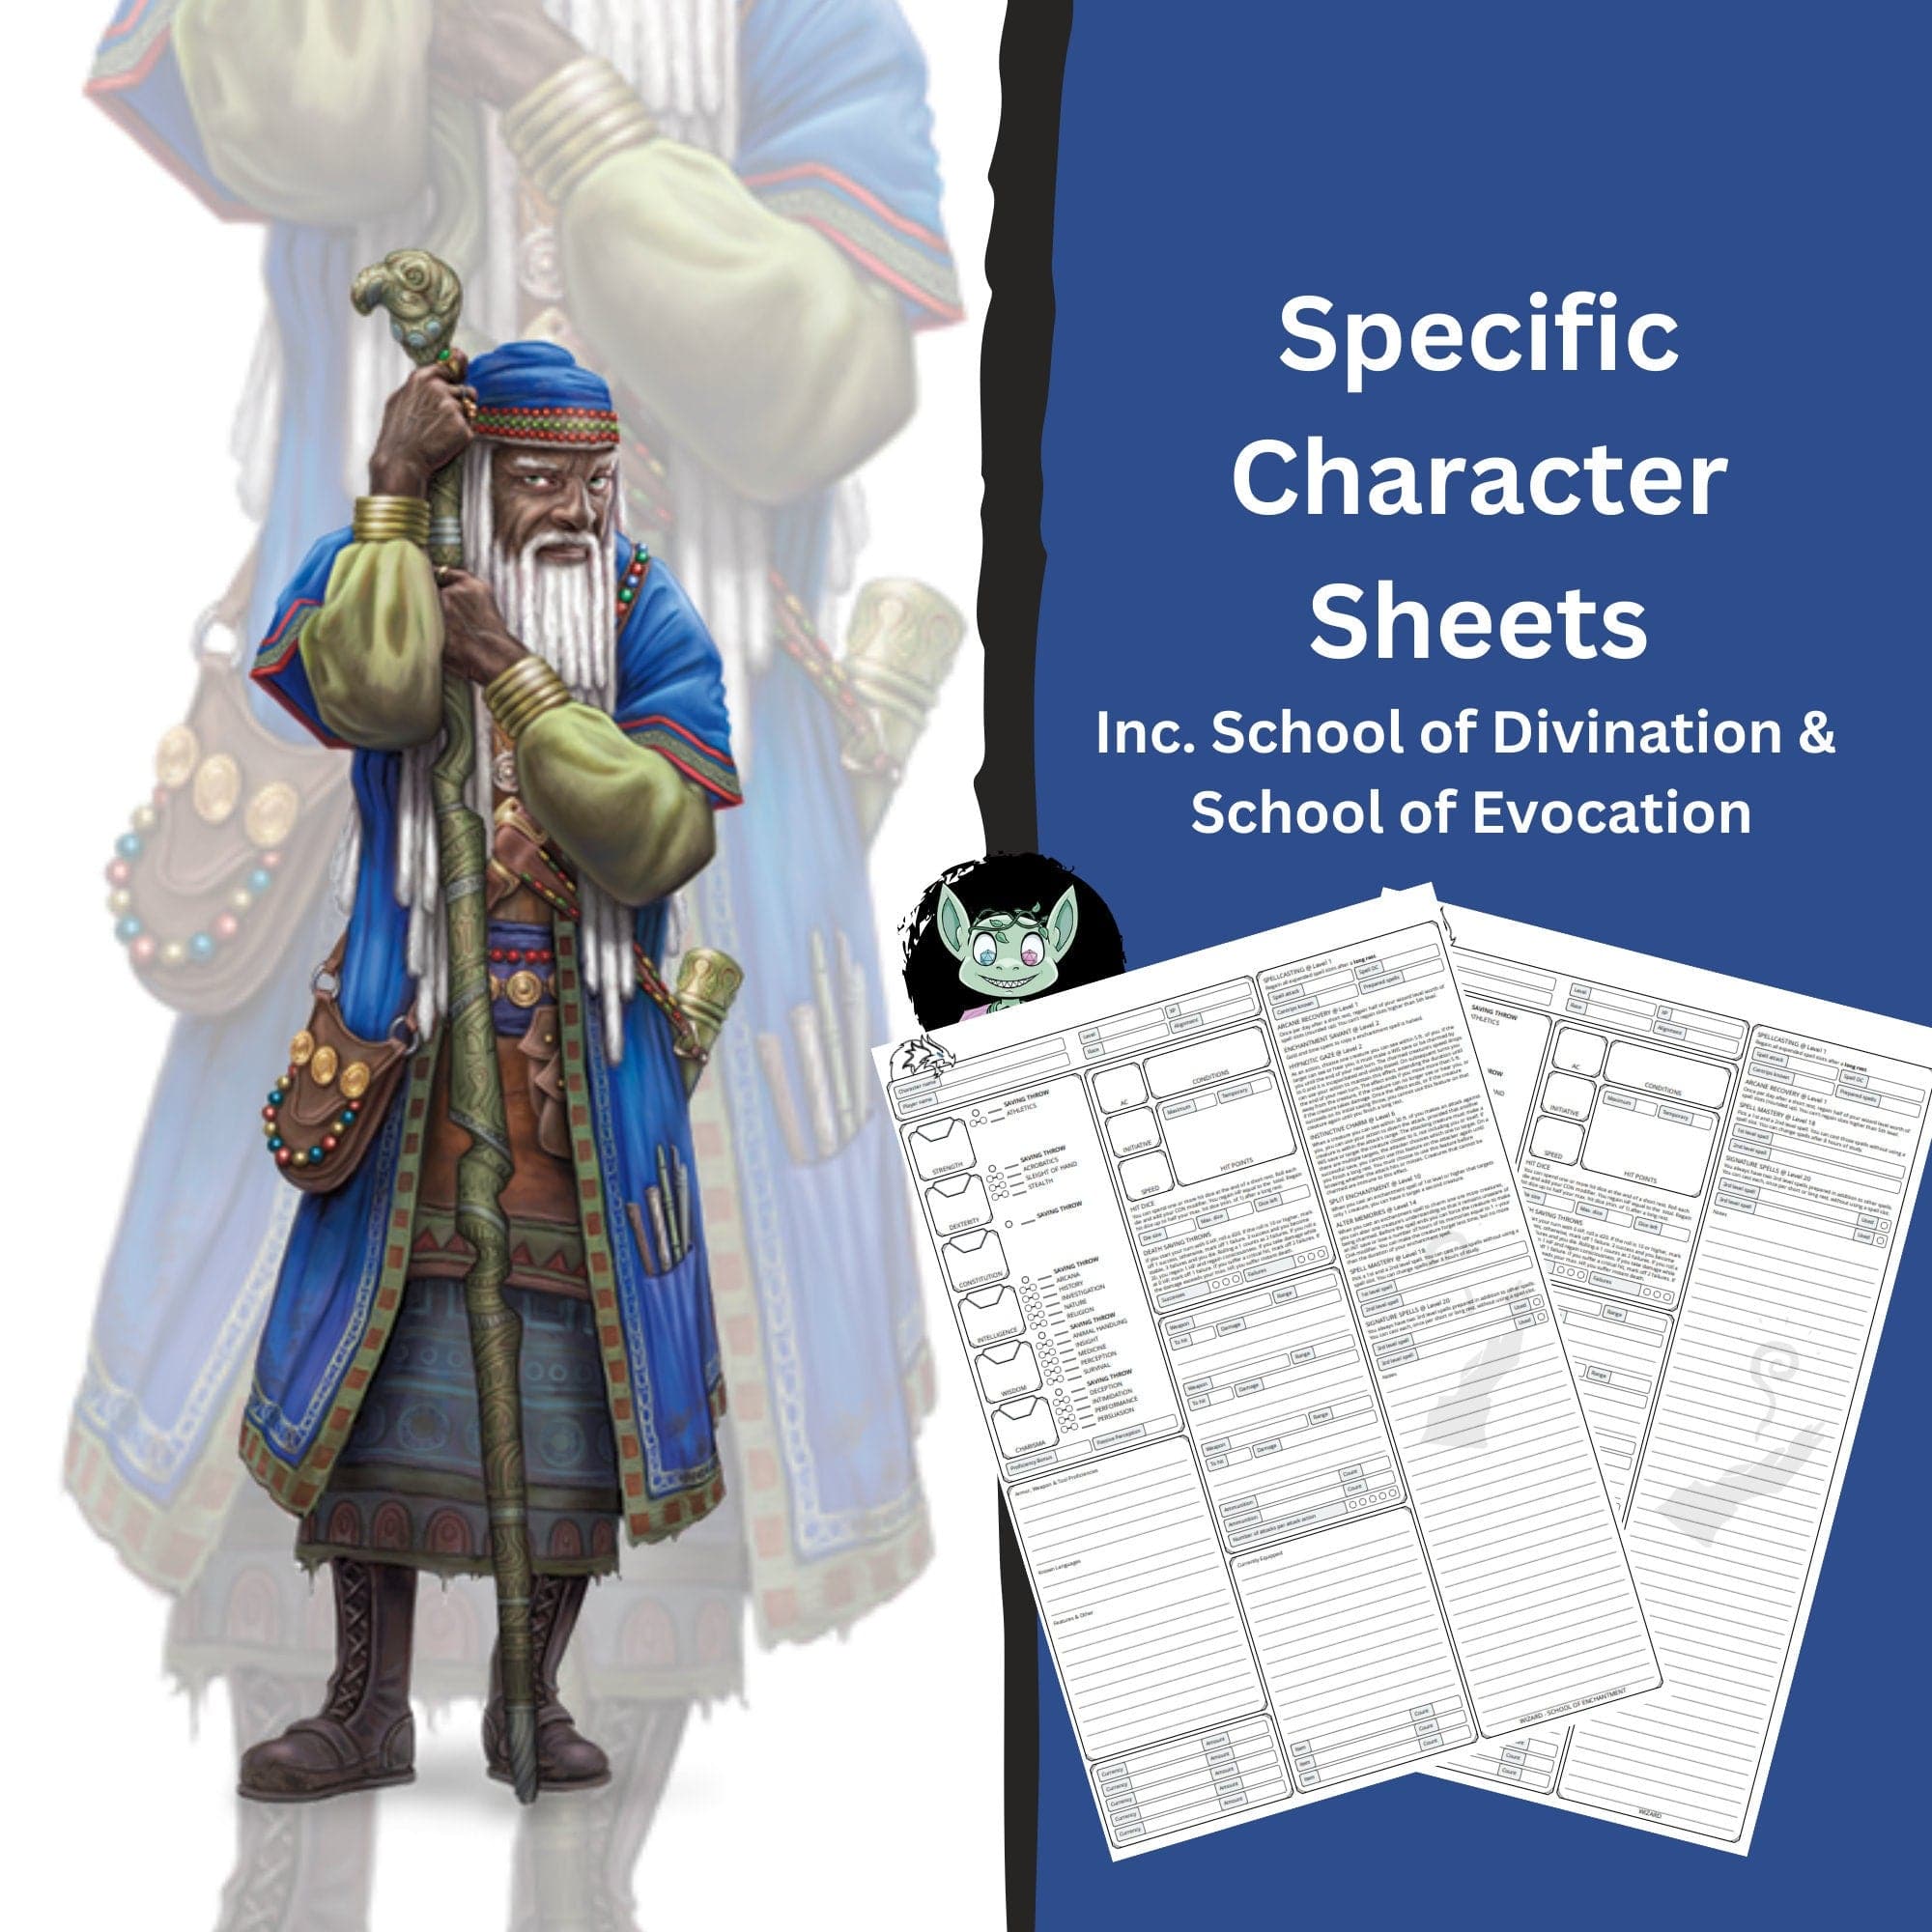 DnD Character Sheet - Wizard - Mystery Dice Goblin